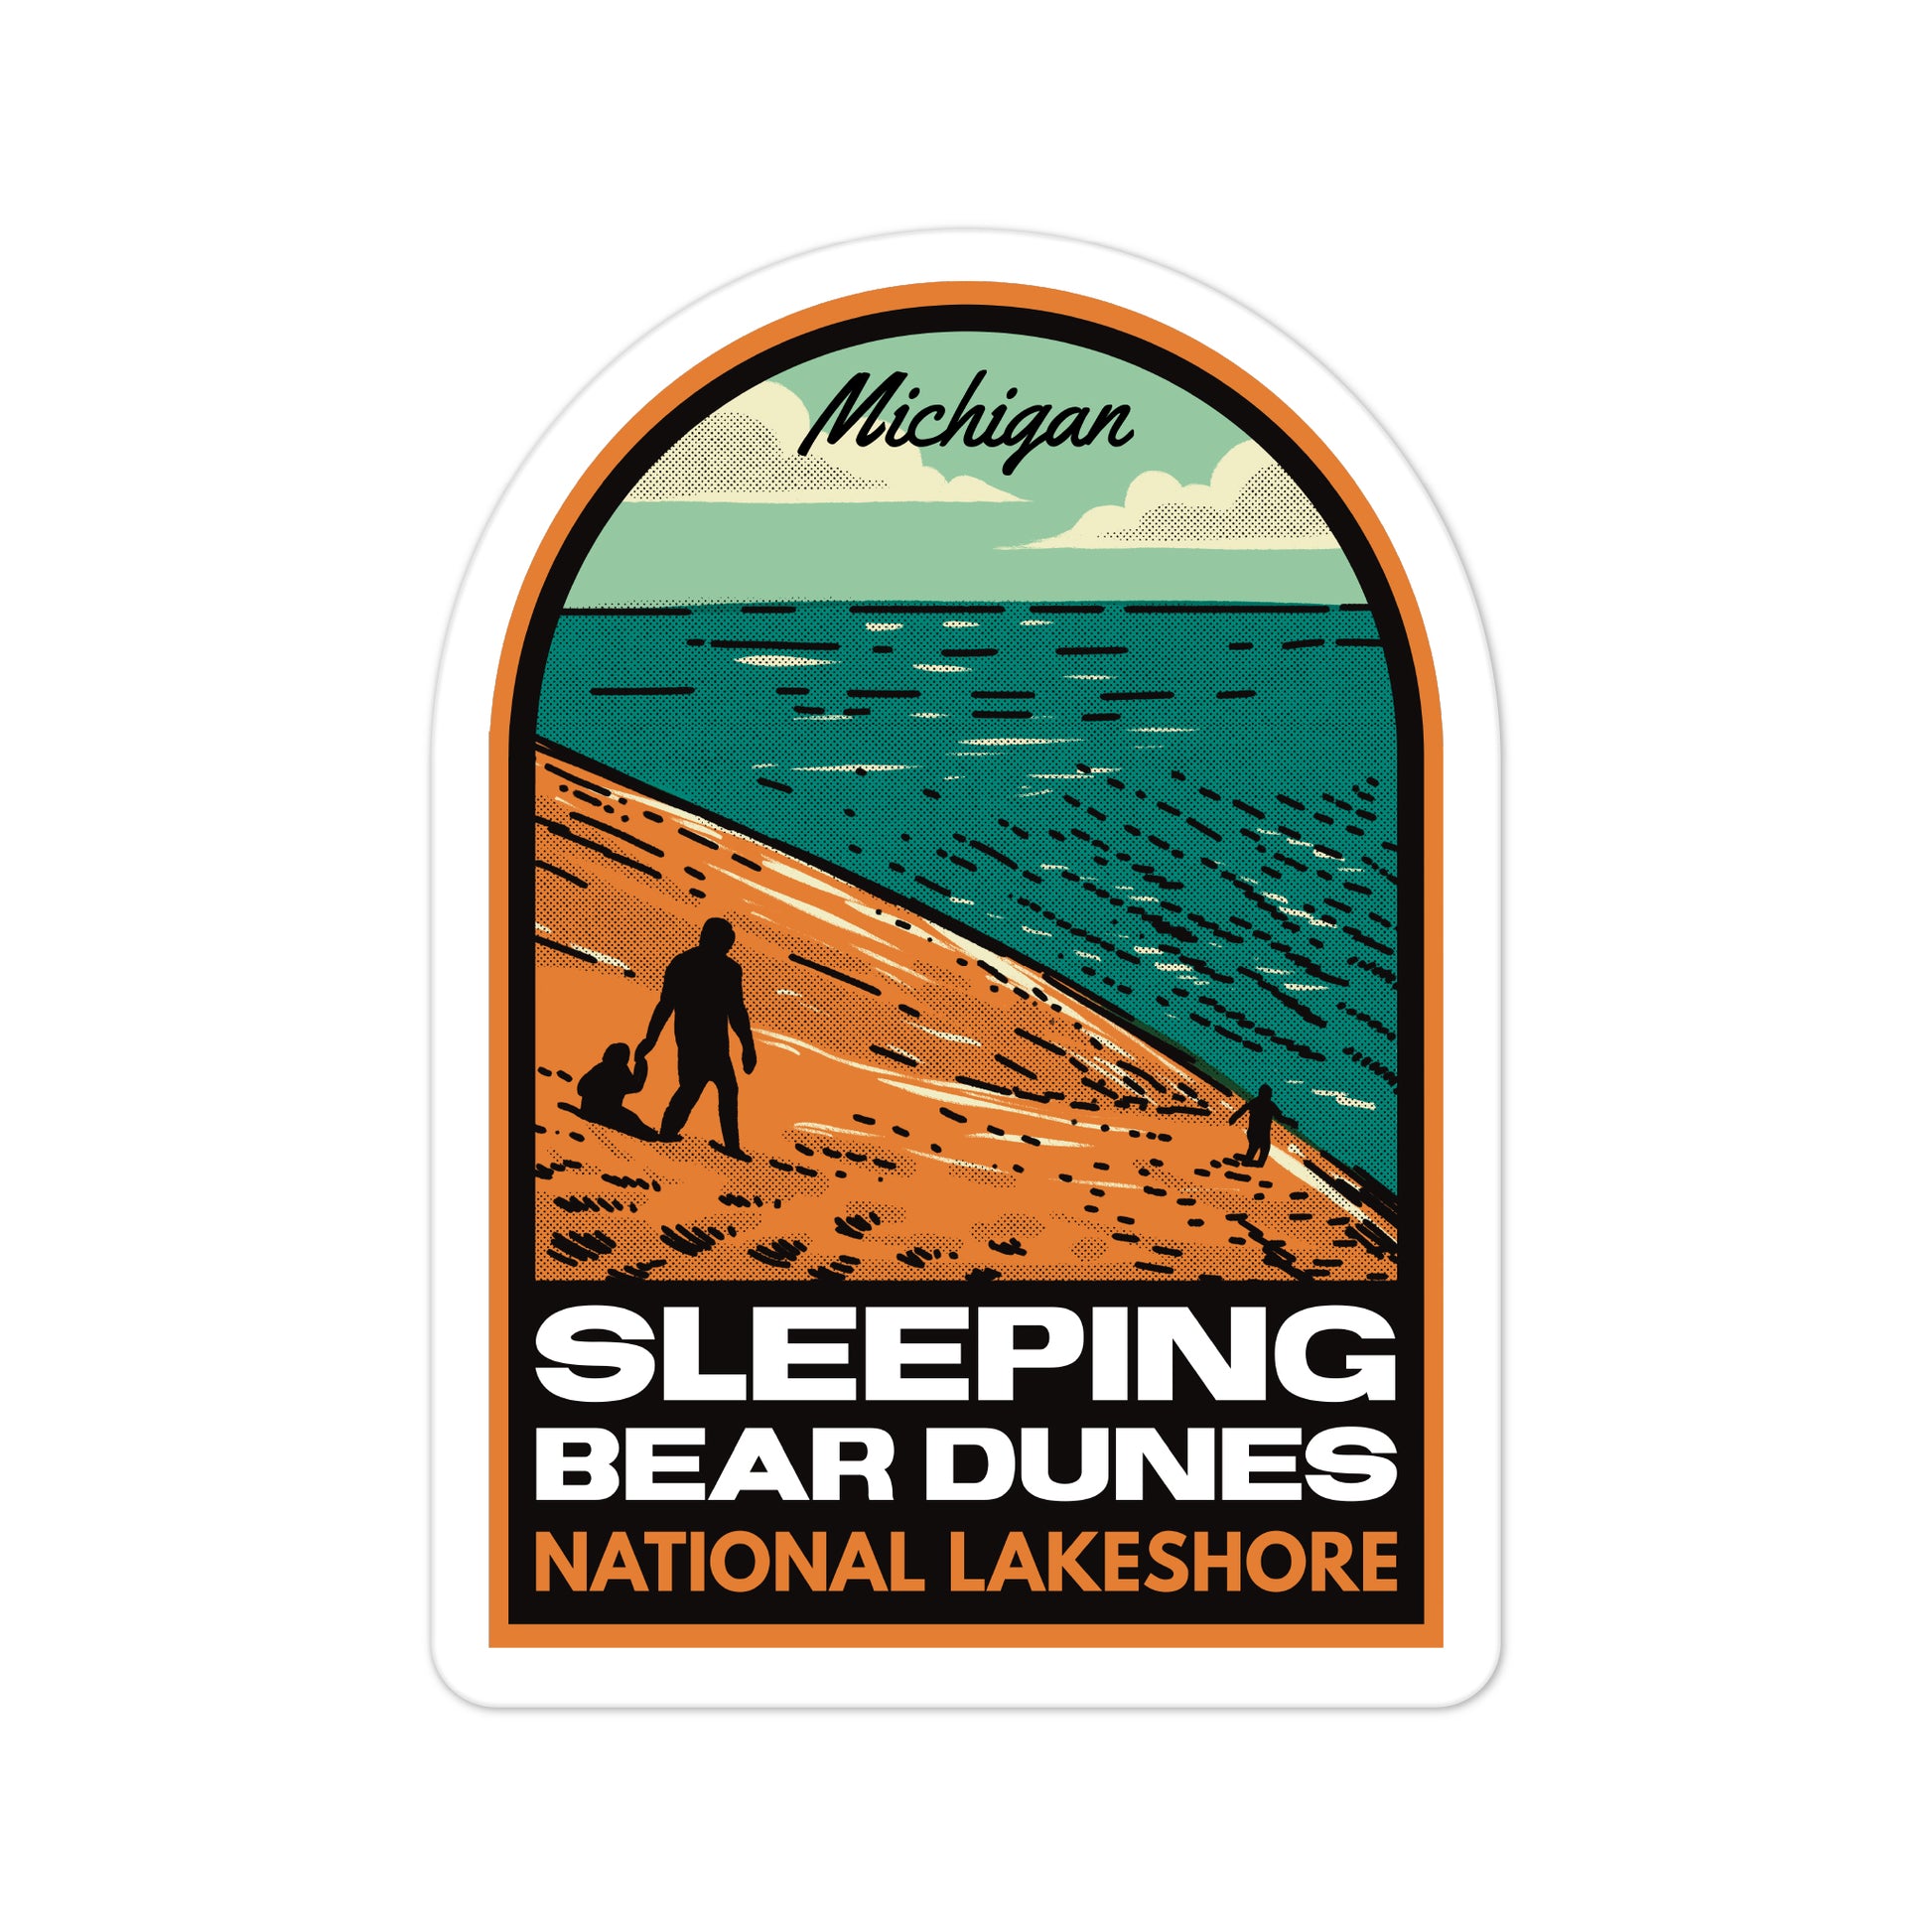 A sticker of Sleeping Bear Dunes National Lakeshore